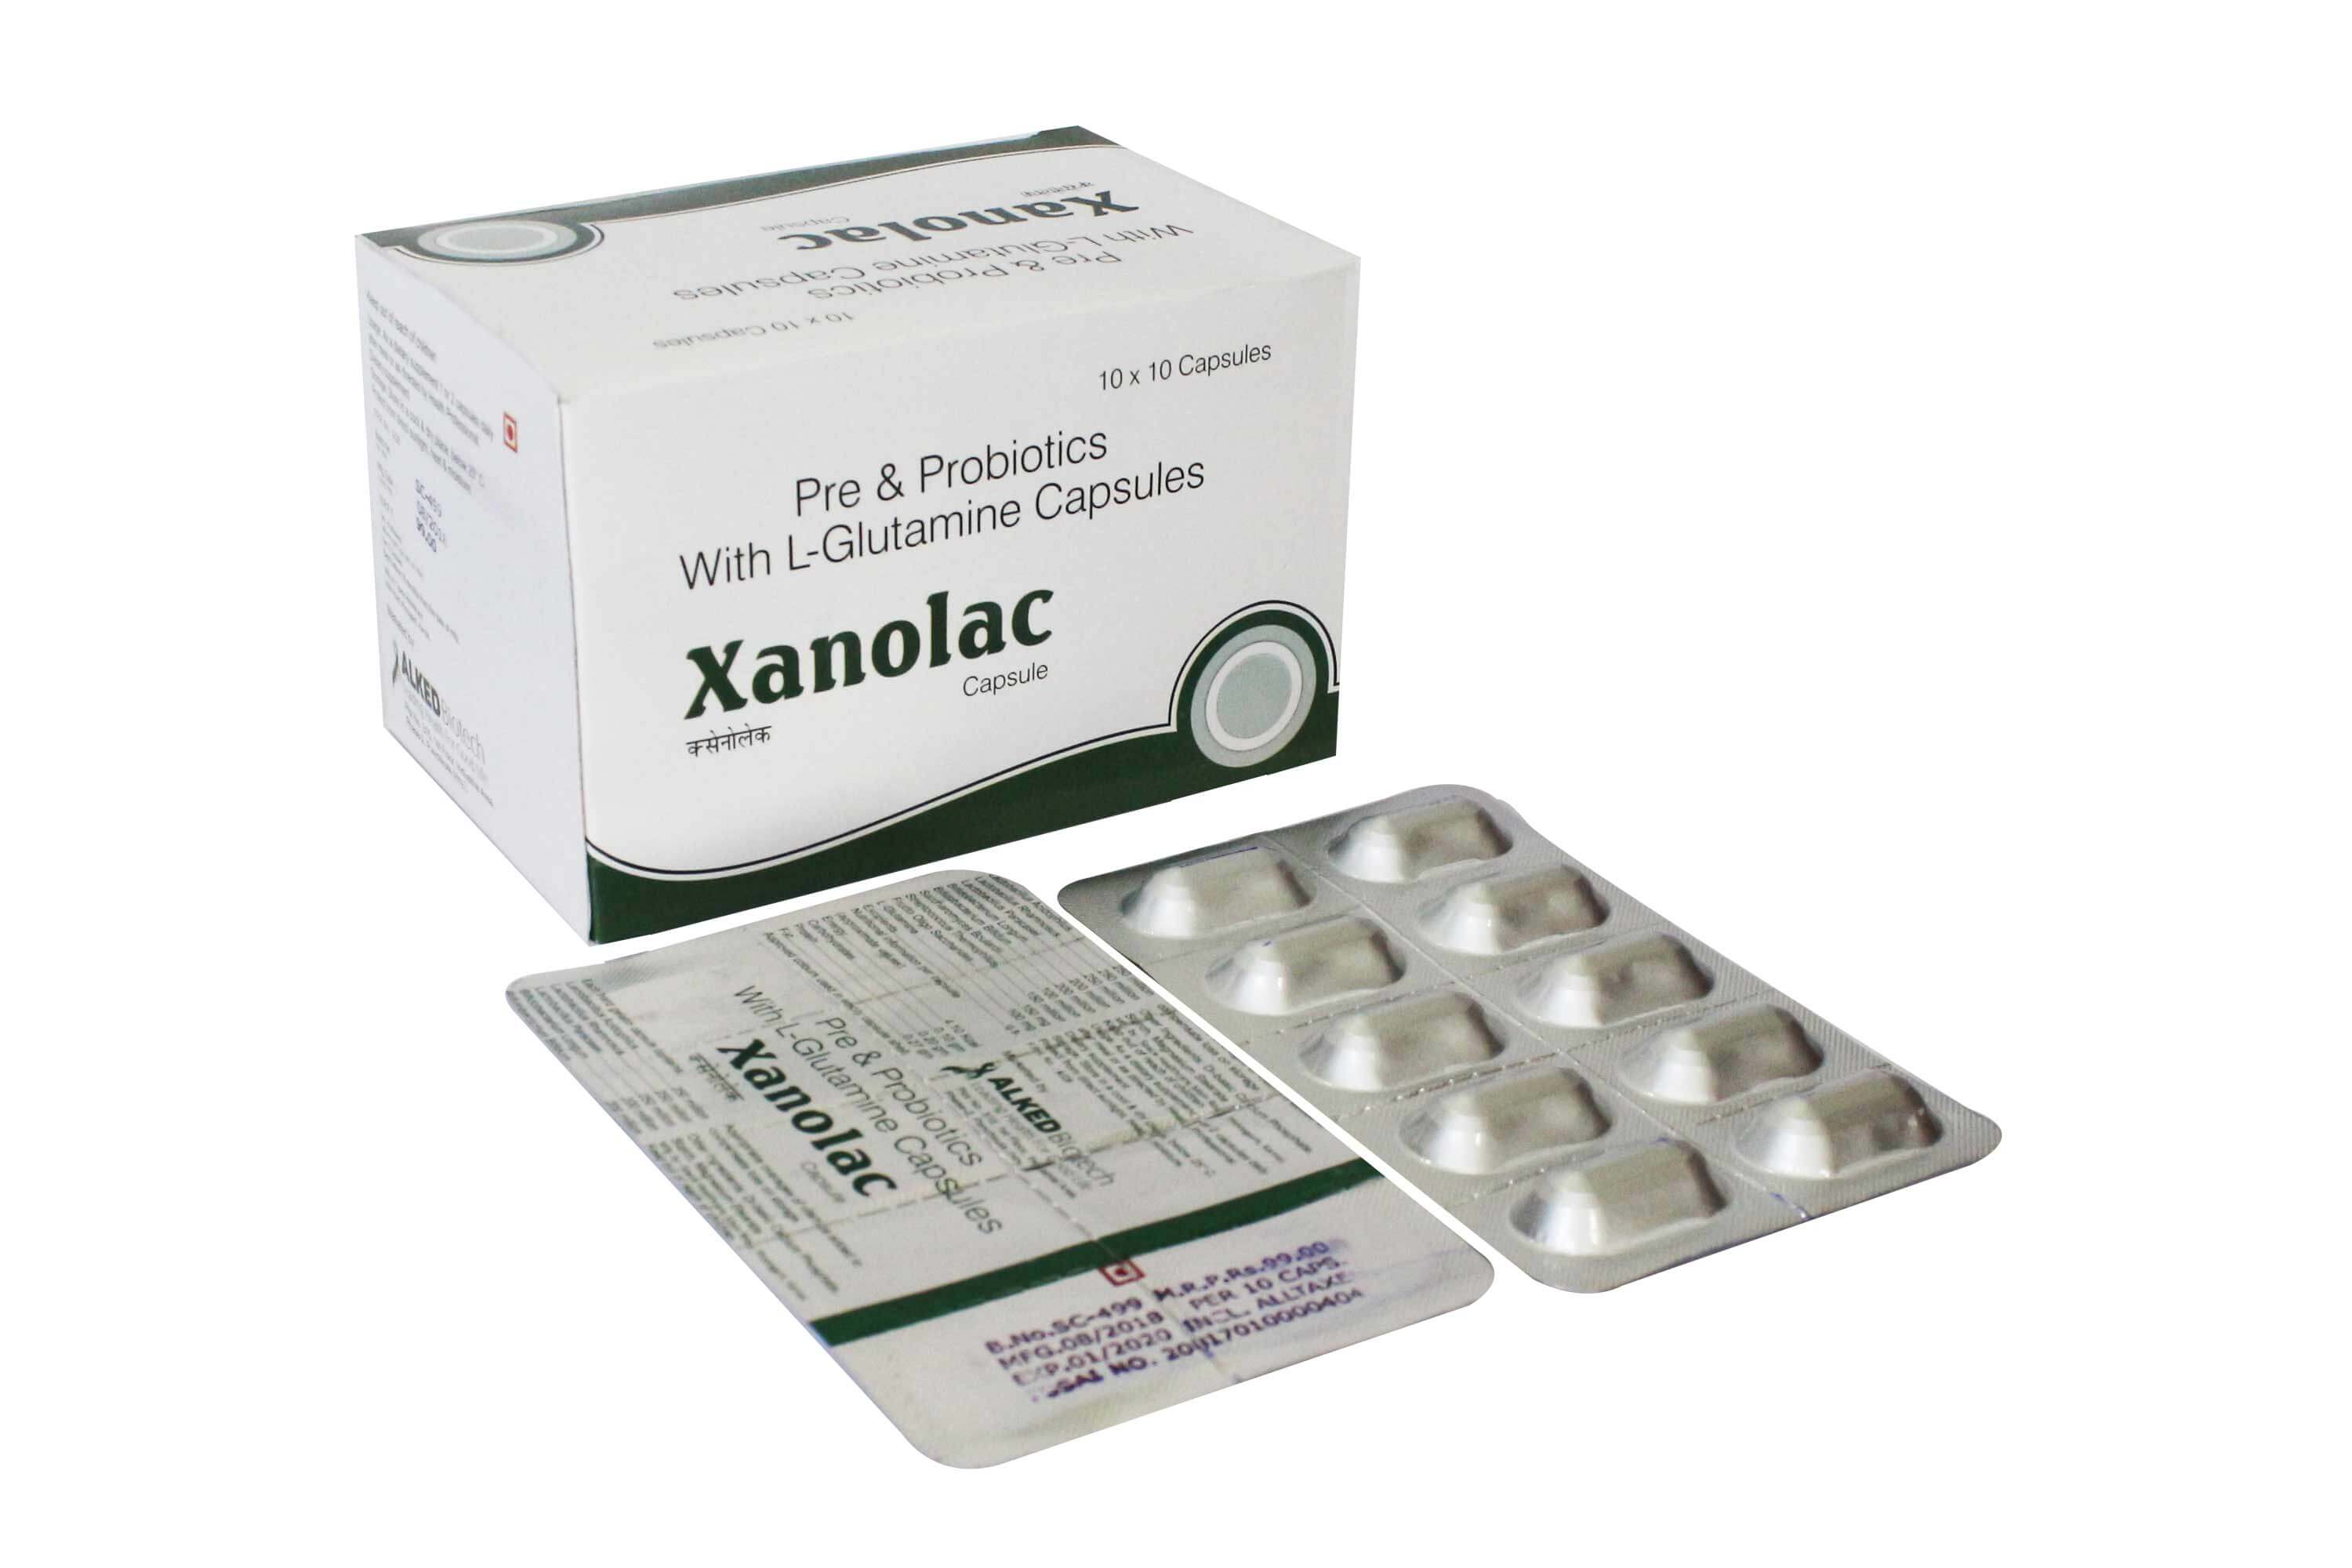 Product Name: Xanolac, Compositions of Xanolac are Pre & Probiotics With L- Glutamine Capsules - Numantis Healthcare